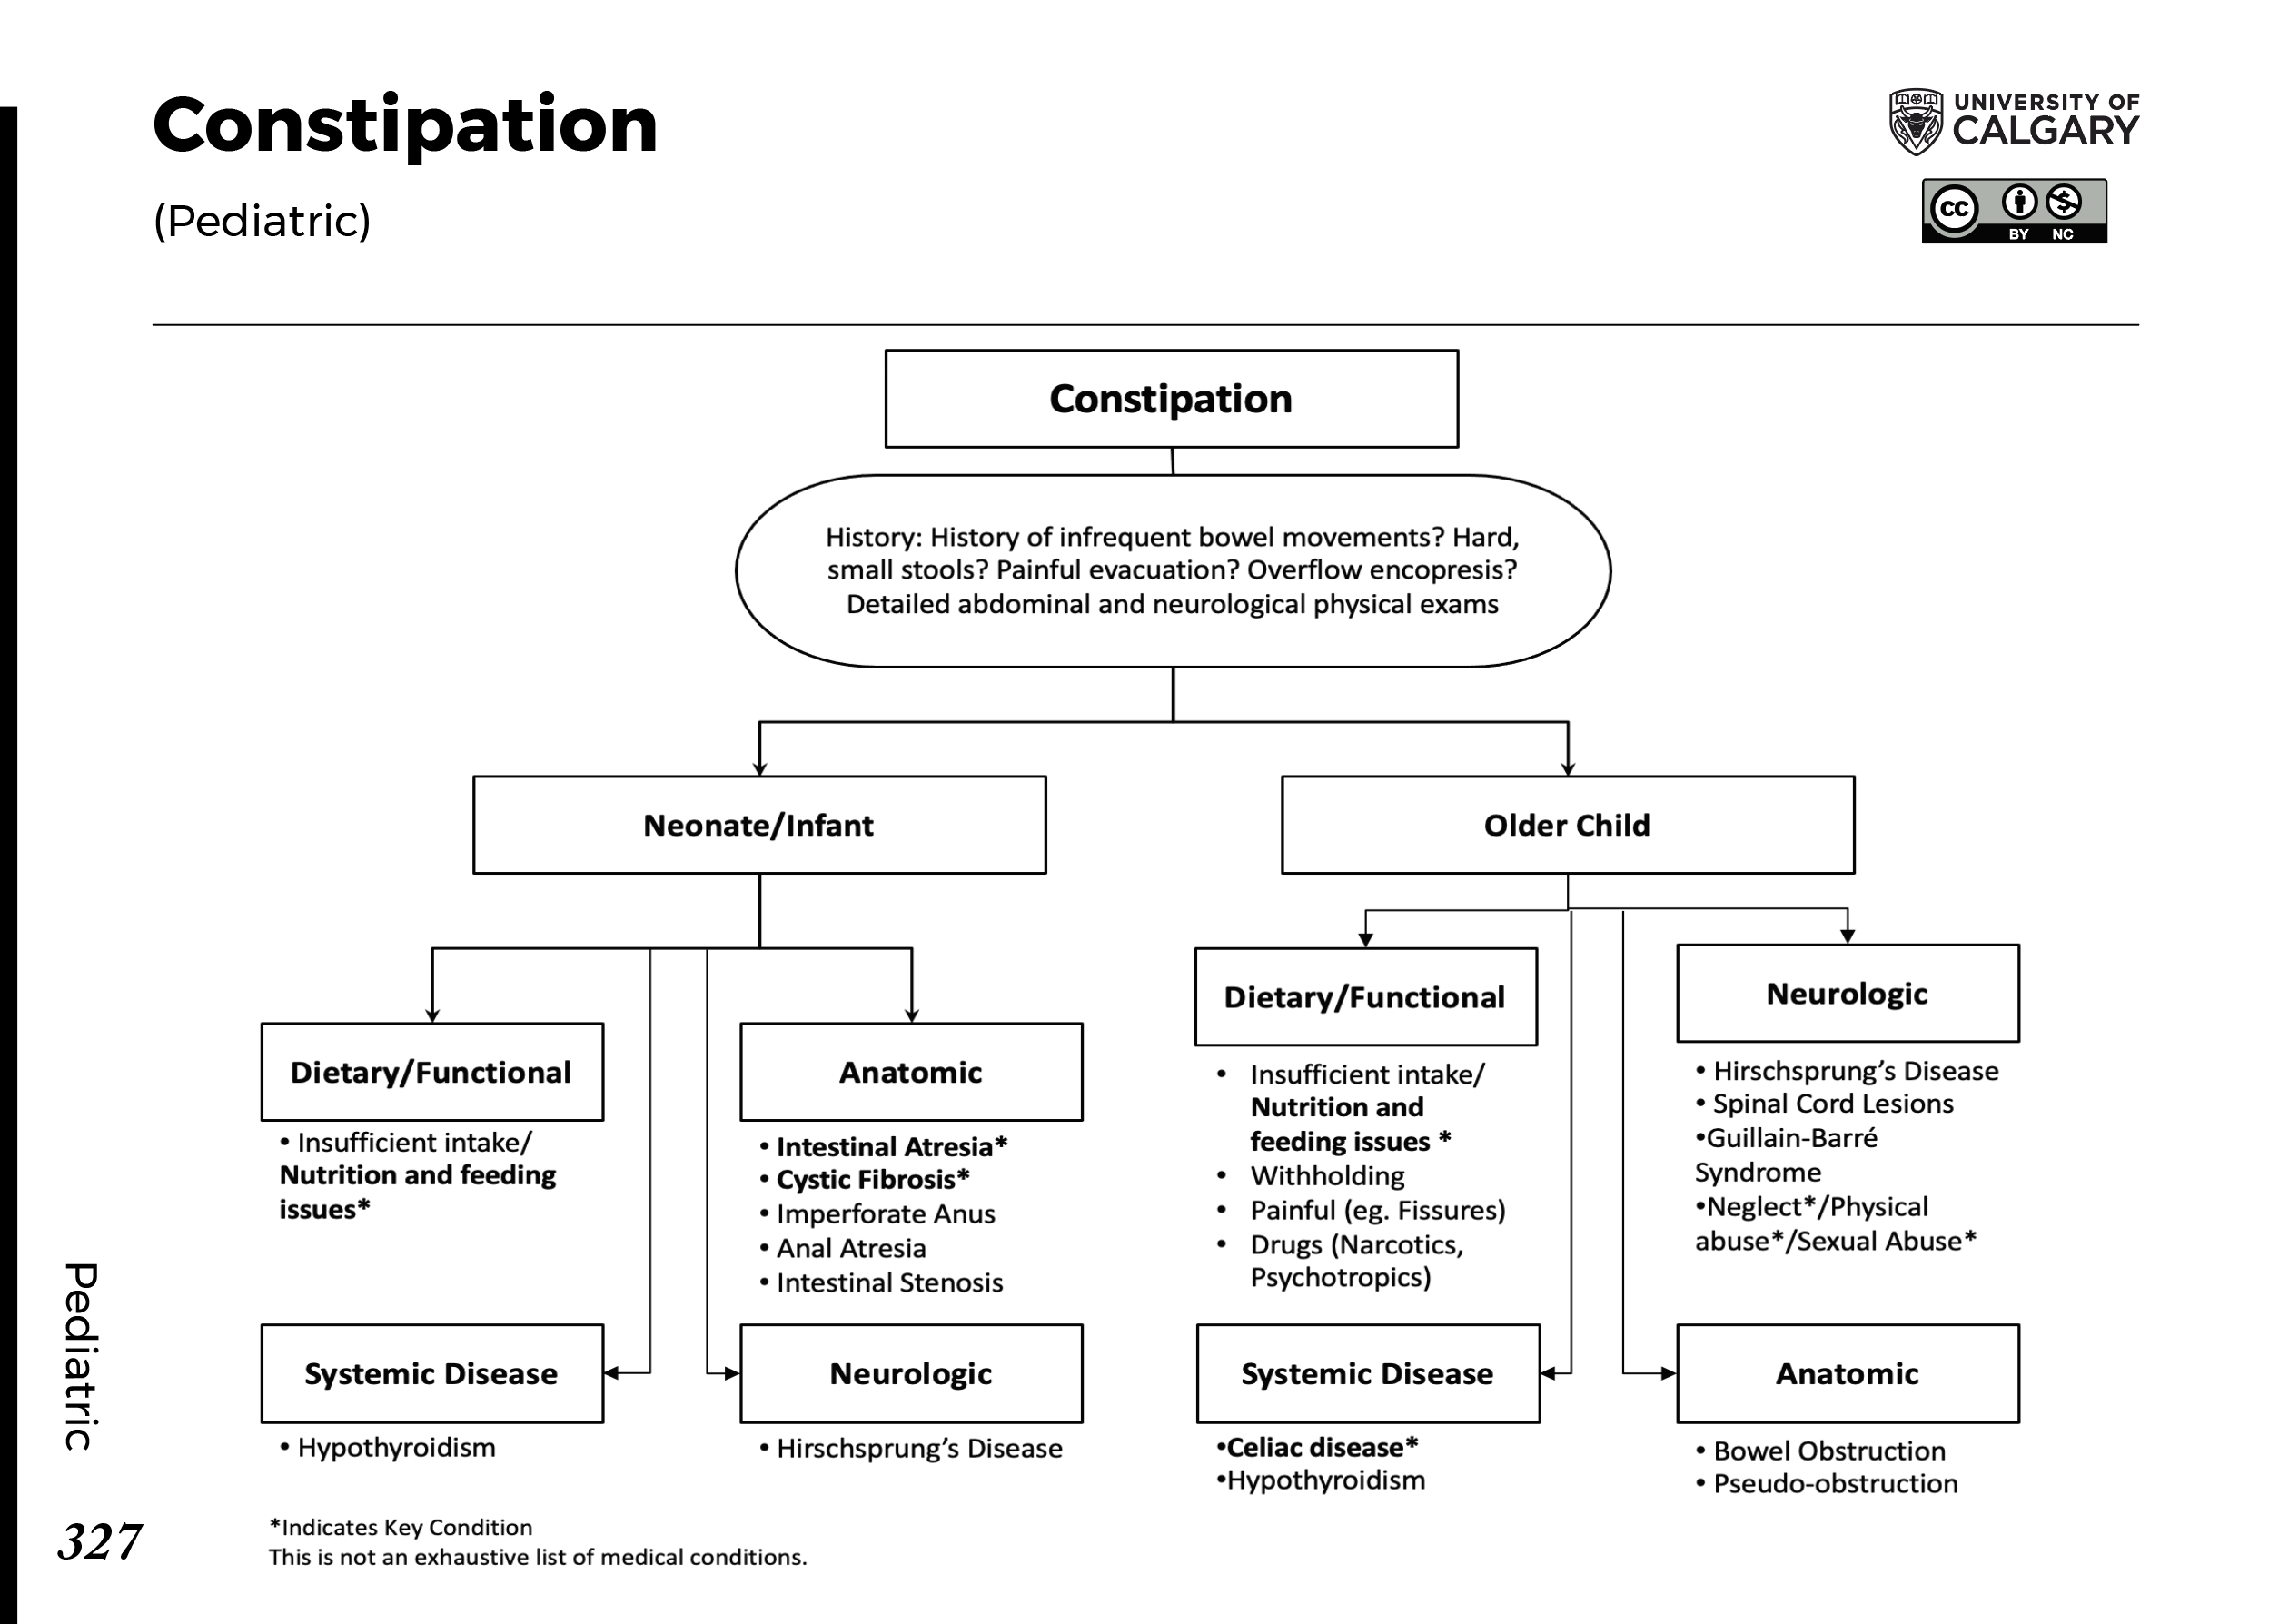 CONSTIPATION: (Pediatric) Scheme